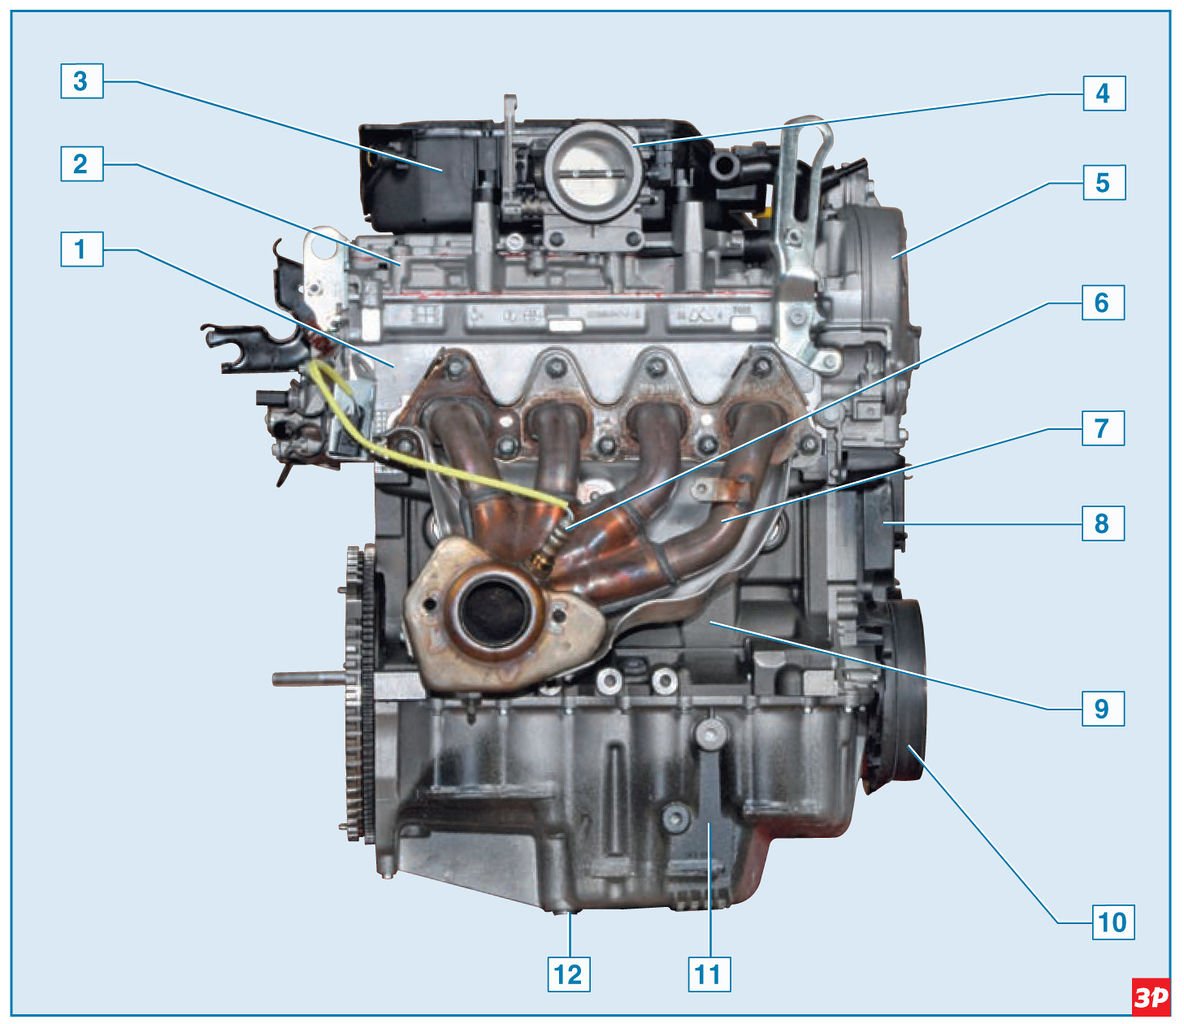 Клапана к4м ларгус купить. Двигатель Рено Ларгус 1.6 16кл. Двигатель к4м Ларгус. Двигатель Ларгус Рено к7м. Двигатель Рено Логан 1.6 16 клапанов.